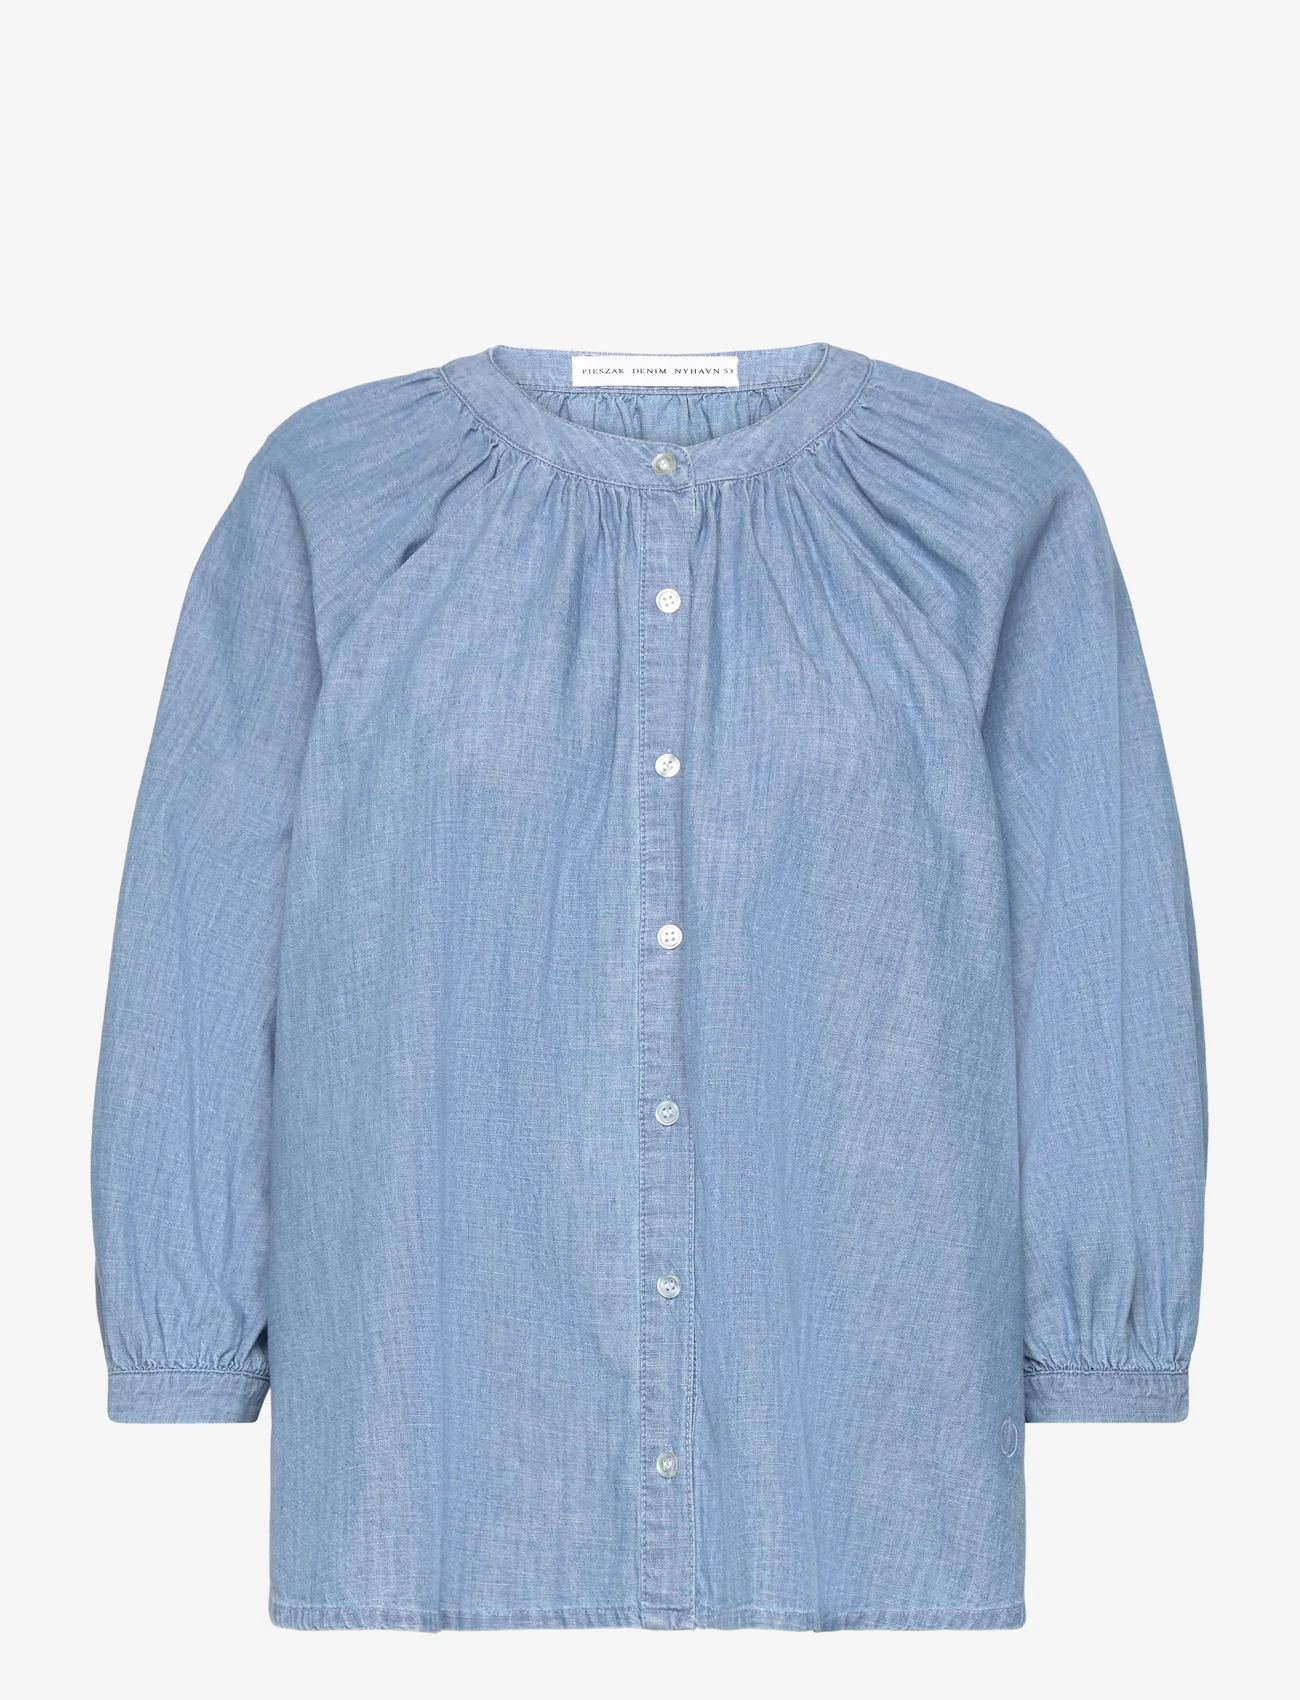 Pieszak - PD-Lola Lonnie Boheme Shirt Fine De - džinsiniai marškiniai - denim blue - 0